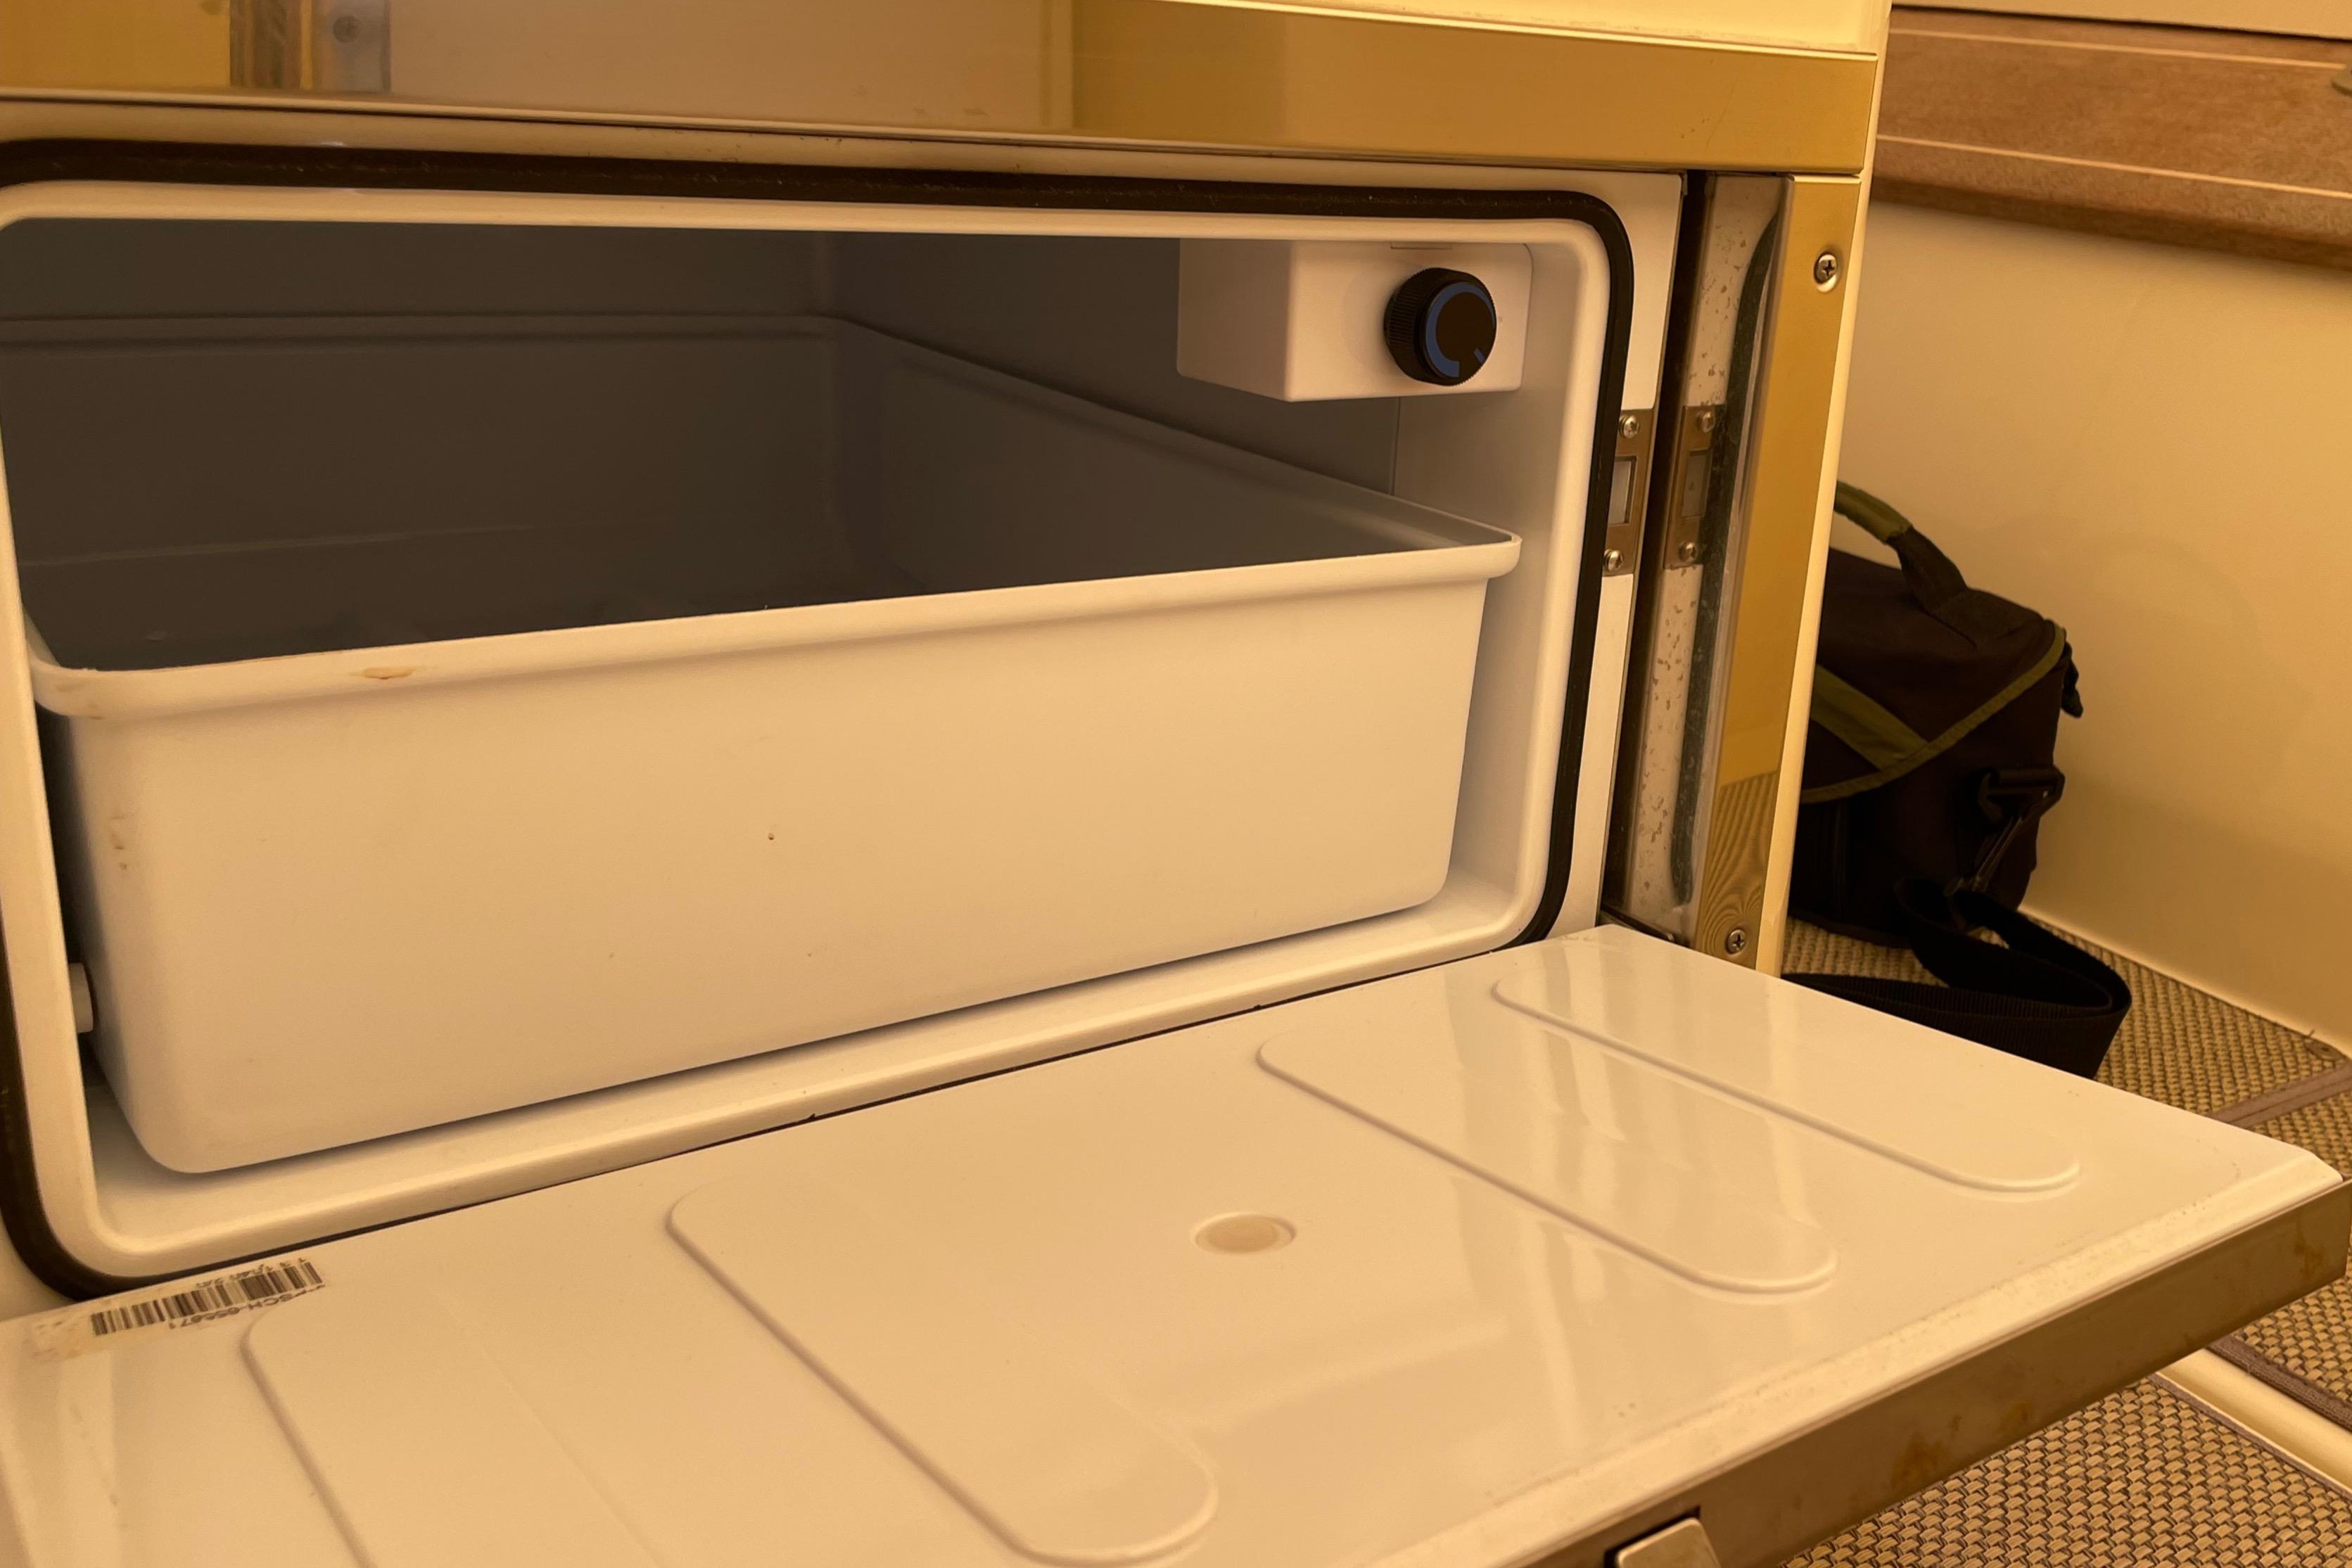 Helm Deck Refrigerator